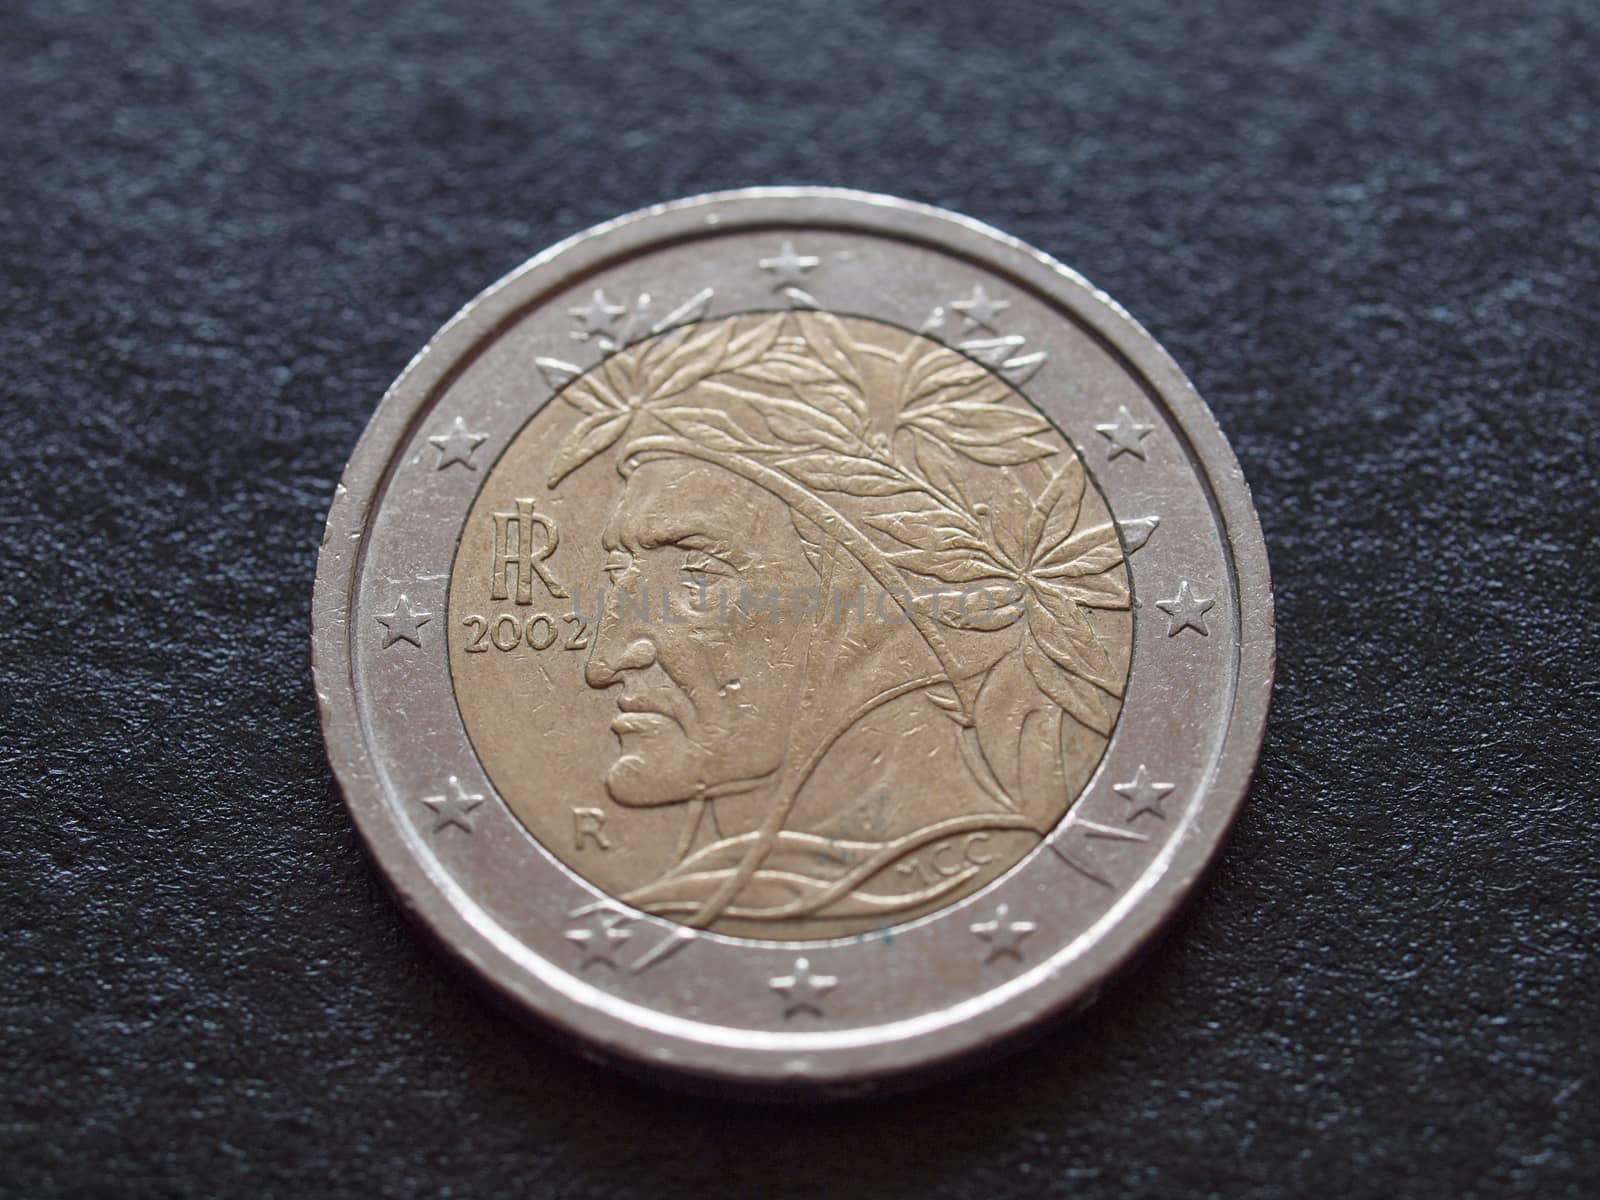 Dante Alighieri EUR coin by paolo77